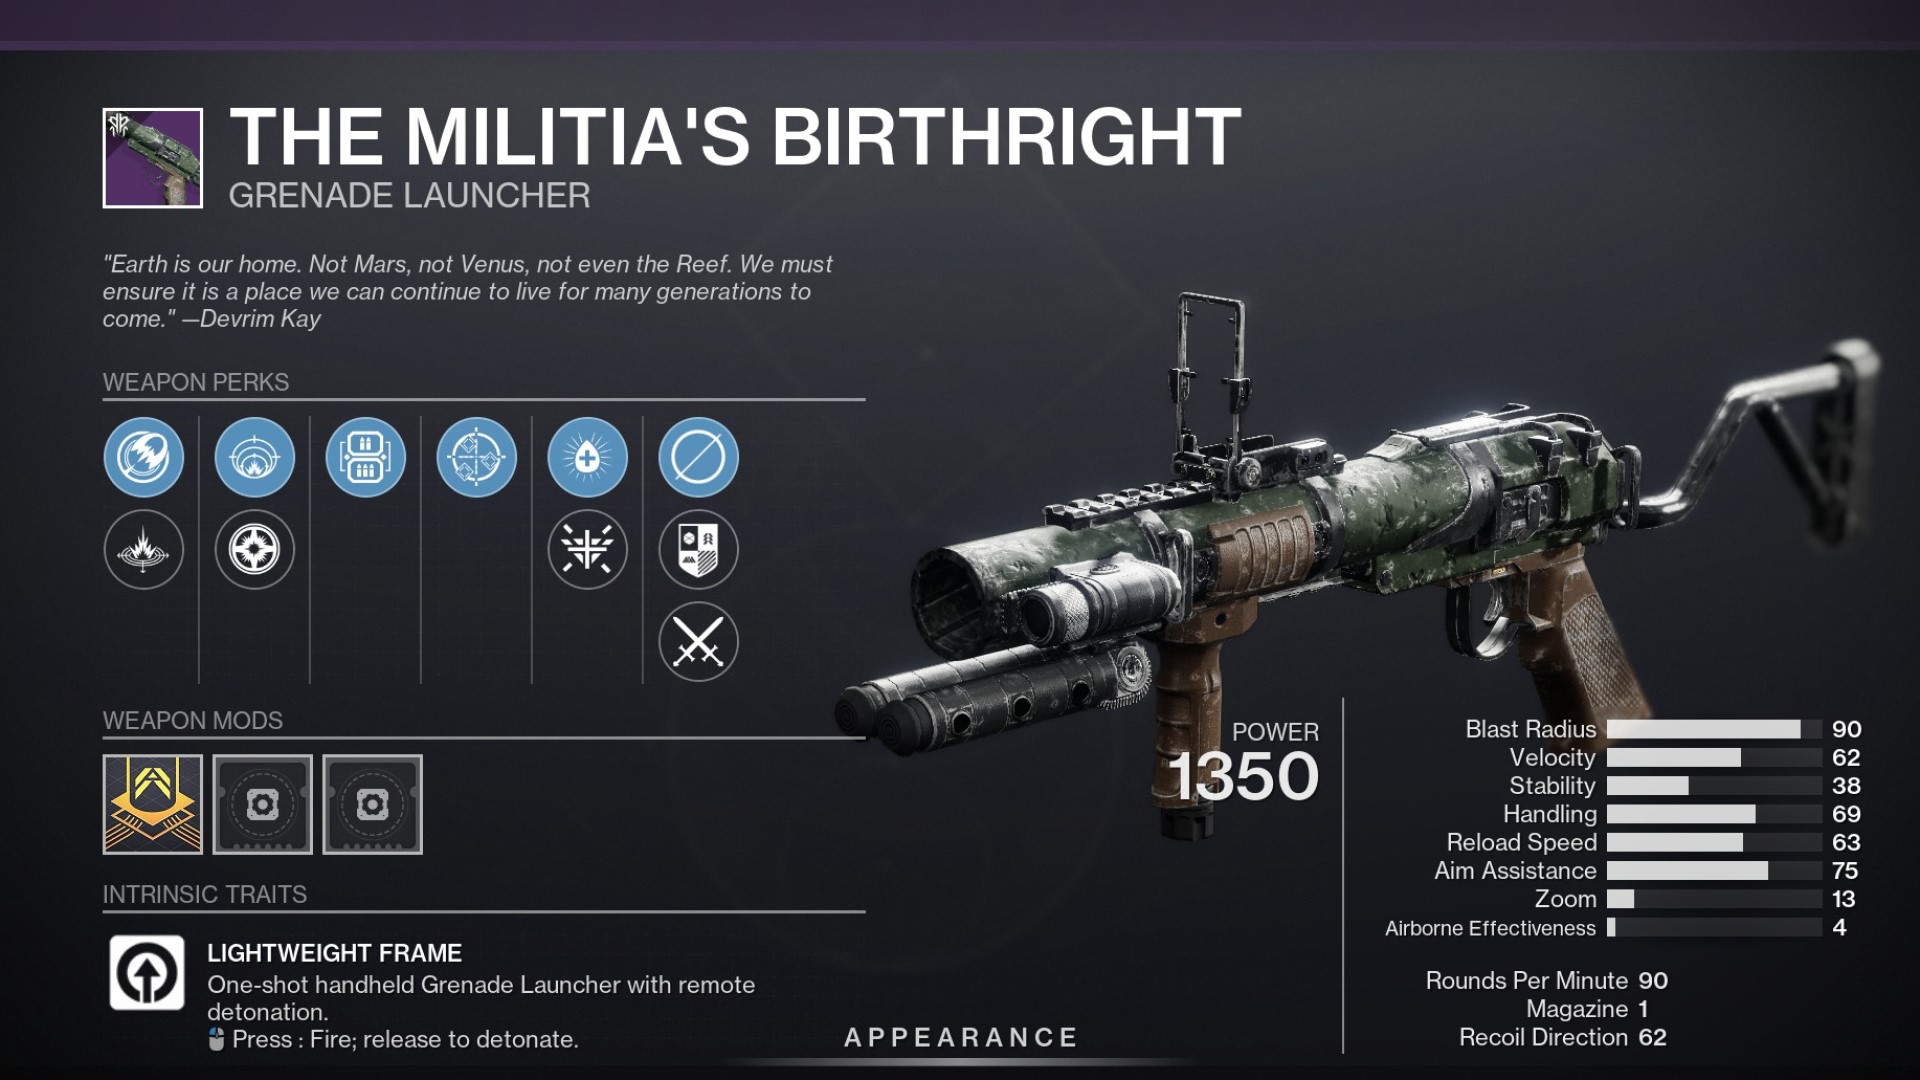 Destiny 2 Milis'in Birthright silah menüsü